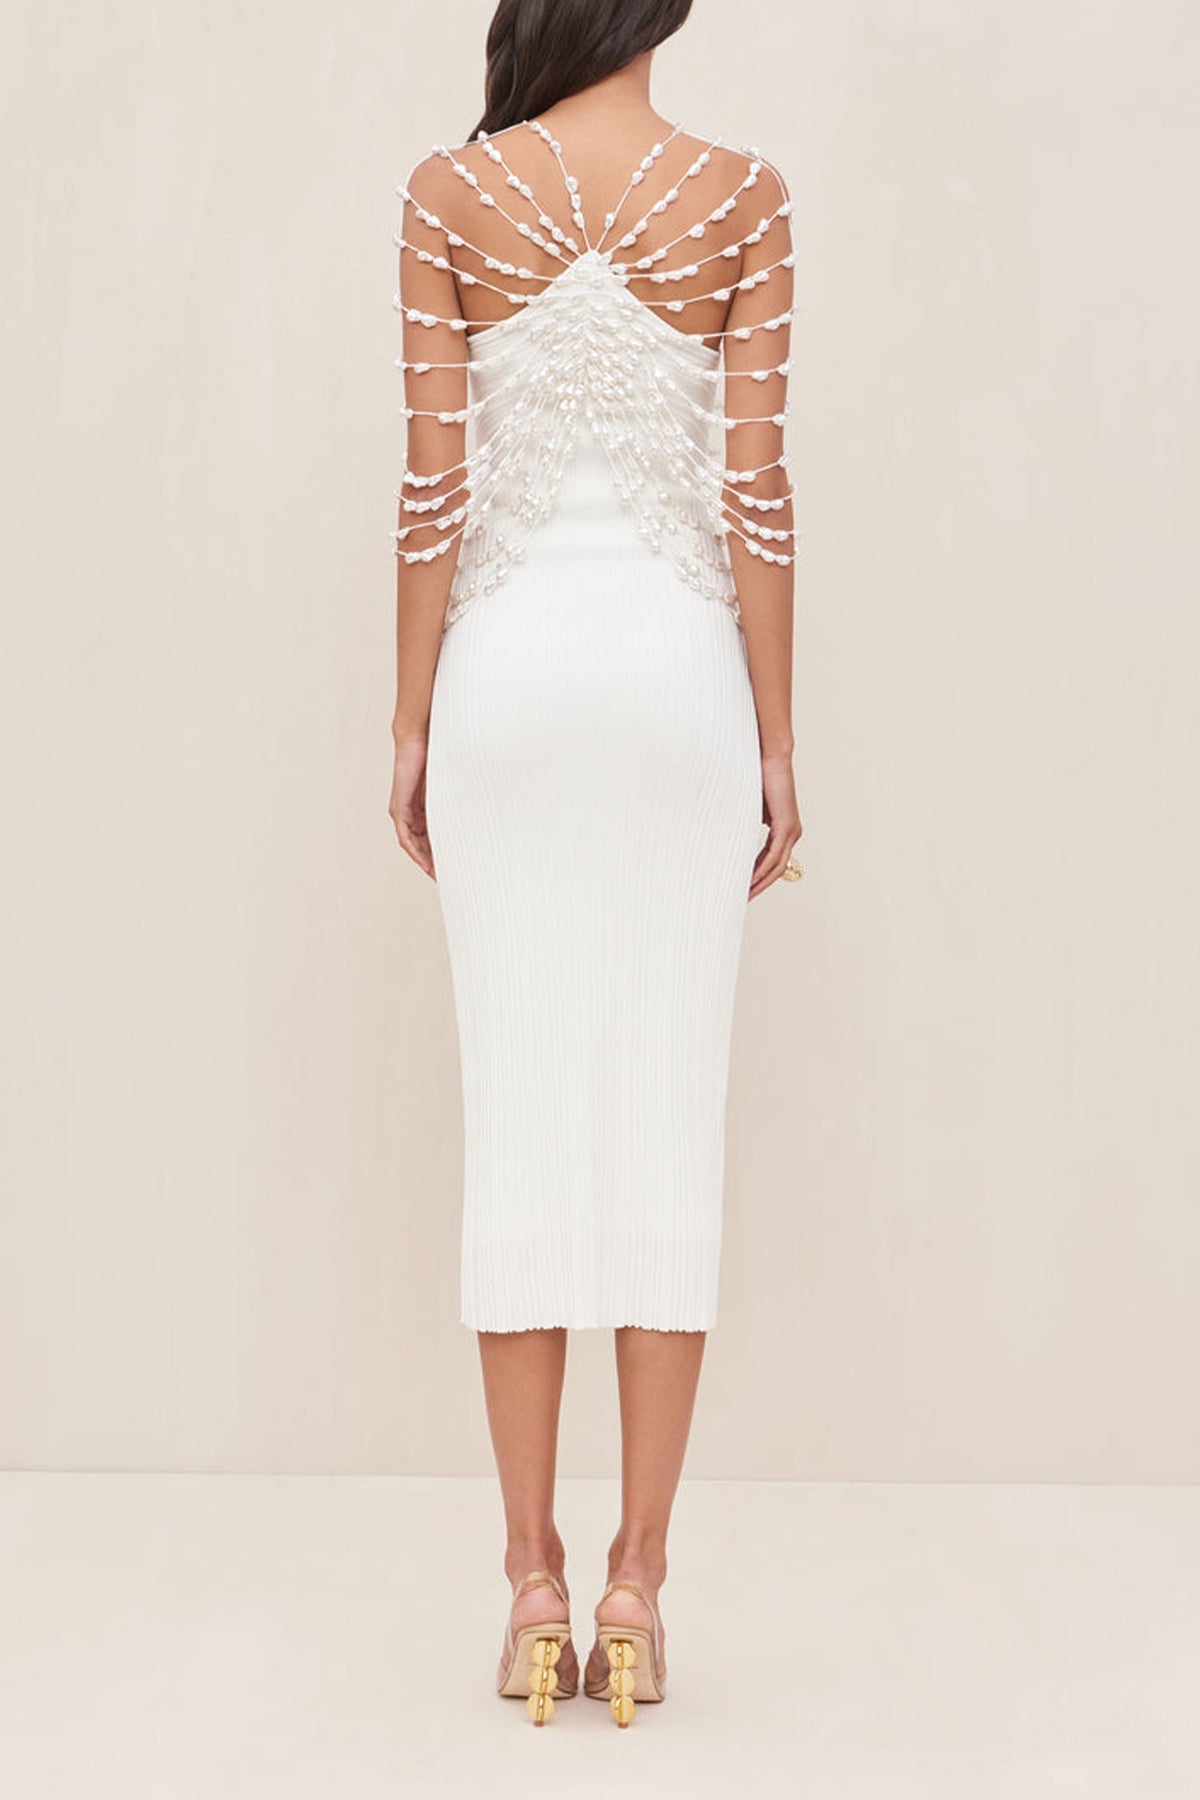 Cecelia Knit Dress in Off White - shop-olivia.com